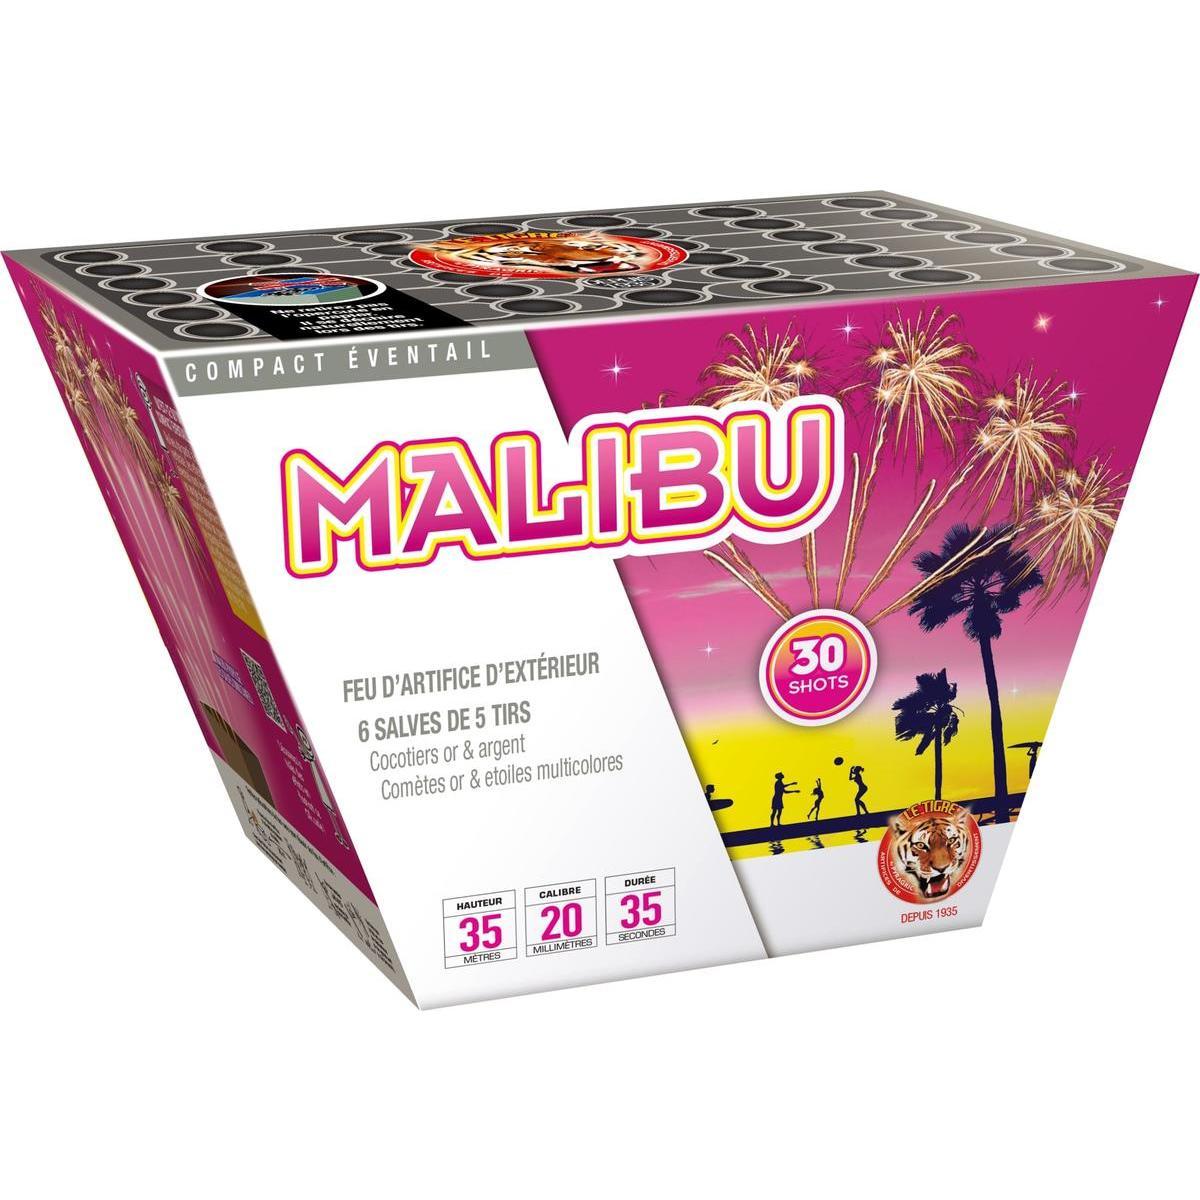 Malibu 30 shots - LE TIGRE